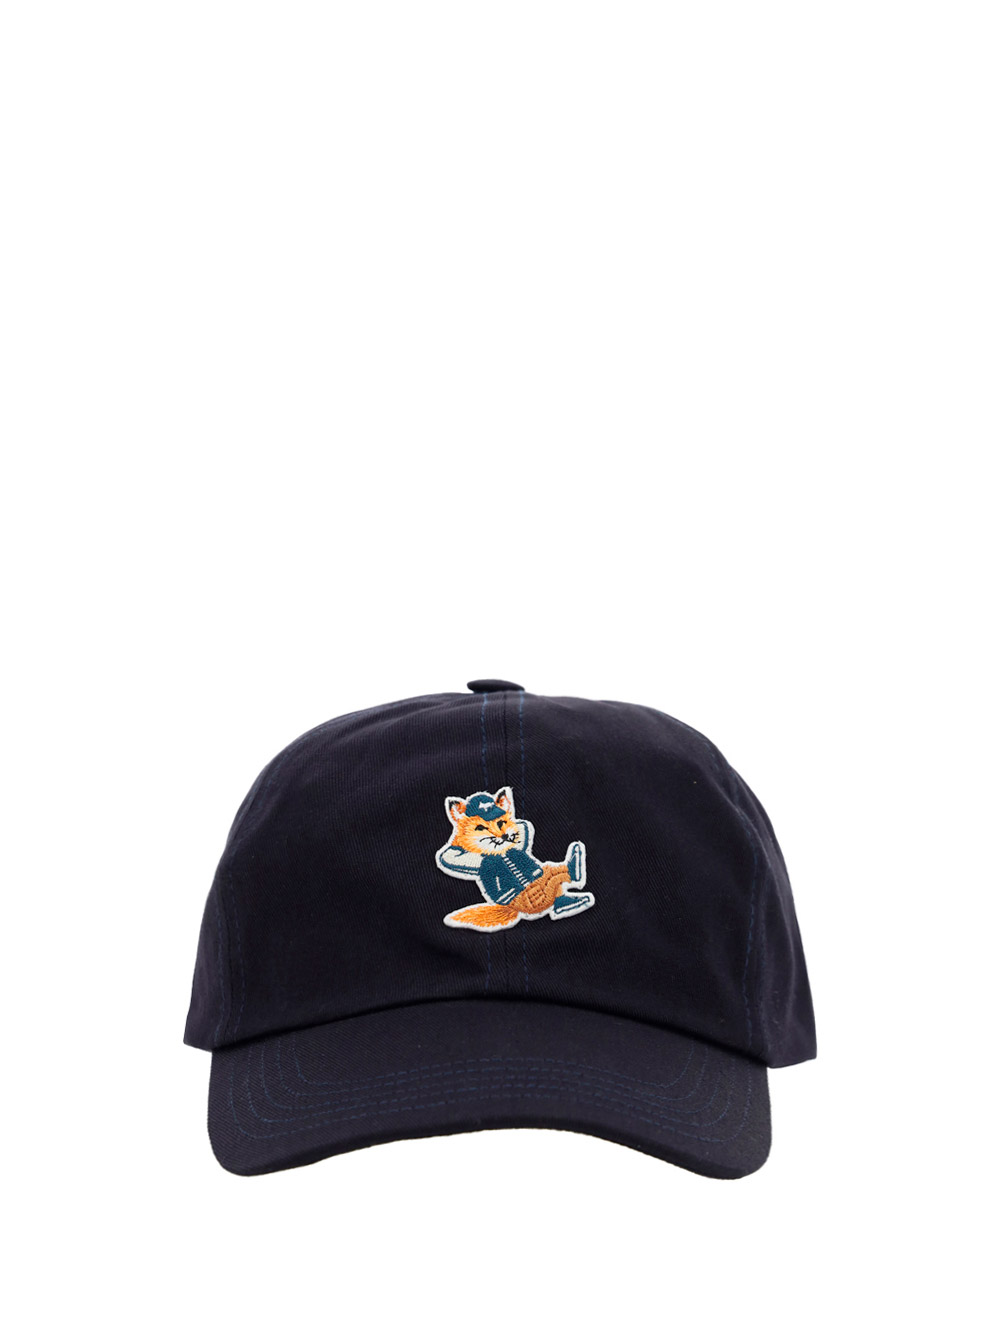 Dressed Fox Baseball Hat